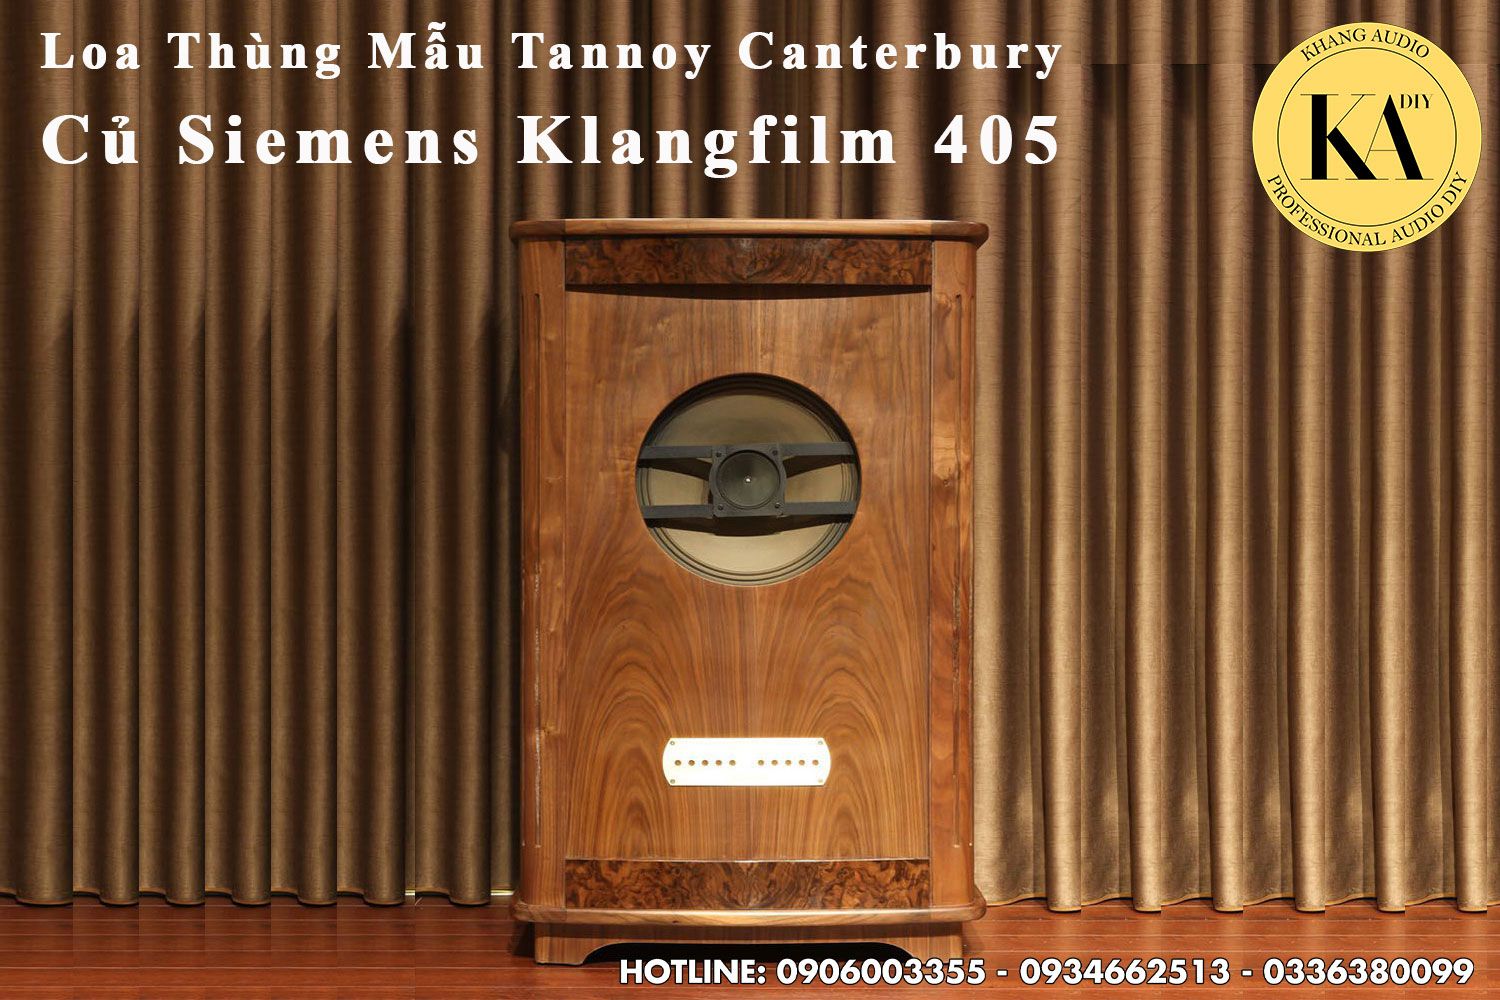 Loa Thùng Mẫu Tannoy Canterbury Củ Siemens Klangfilm 405